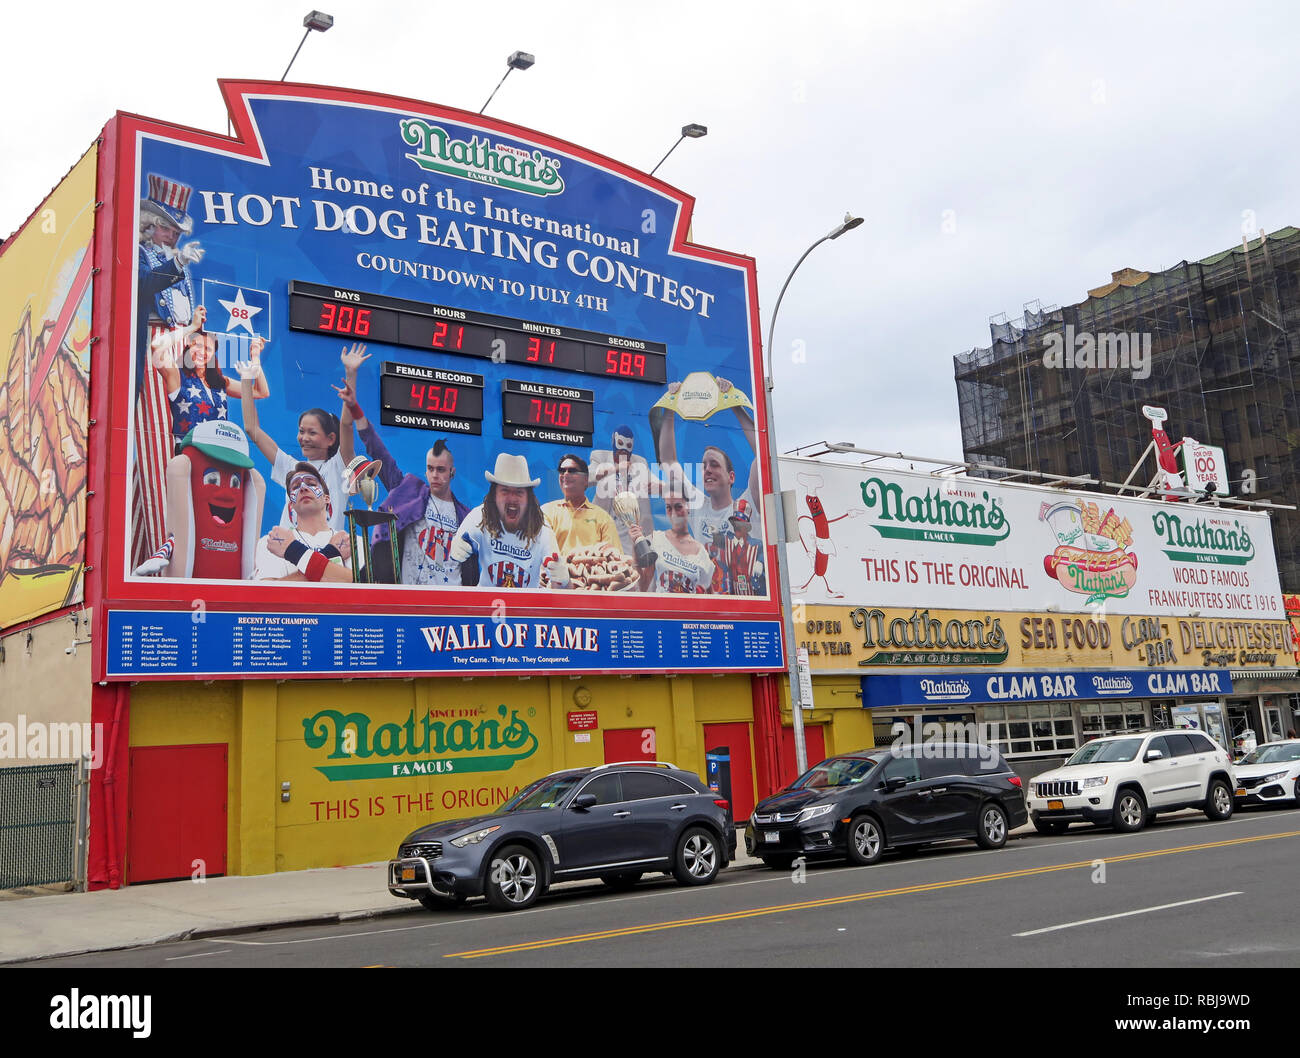 Nathans Handwerker berühmten Frankfurter Würstchen Hotdog Hotdog essen Contest, Coney Island, im Stadtbezirk Brooklyn, New York, NY, USA Stockfoto